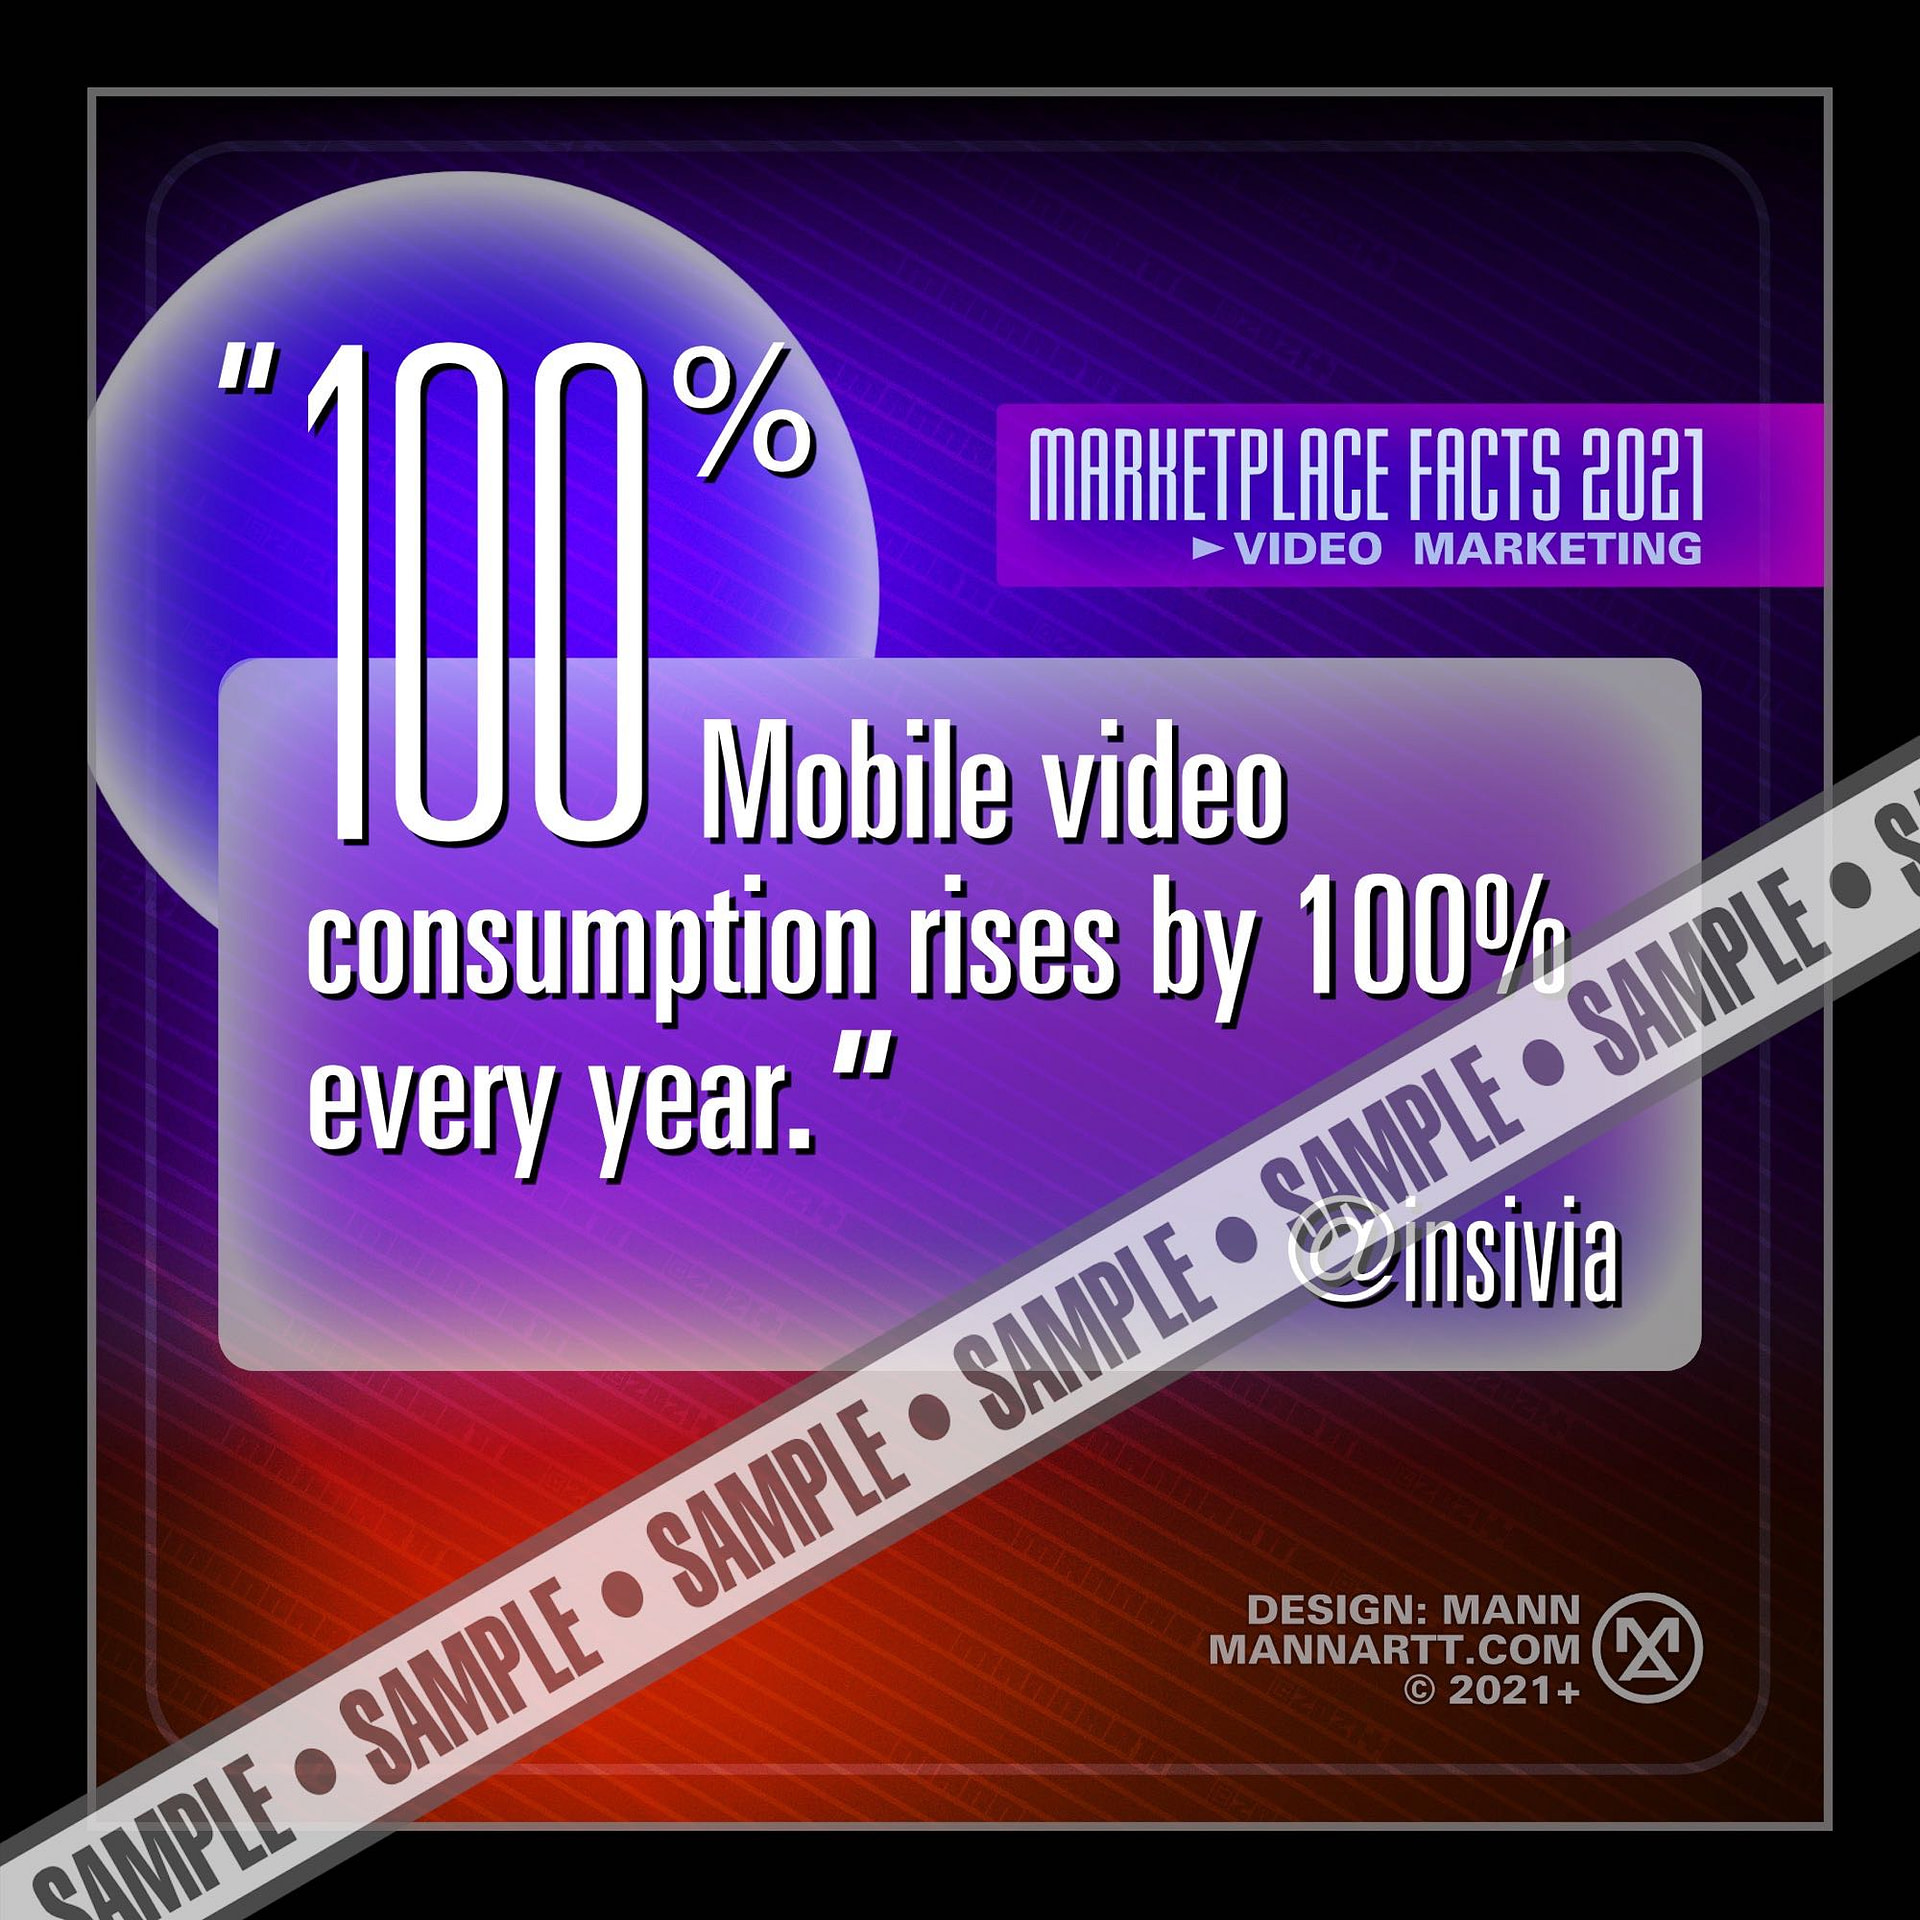 Sample of Mann's social media memes - Marketplace Facts 2021 - Video Marketing